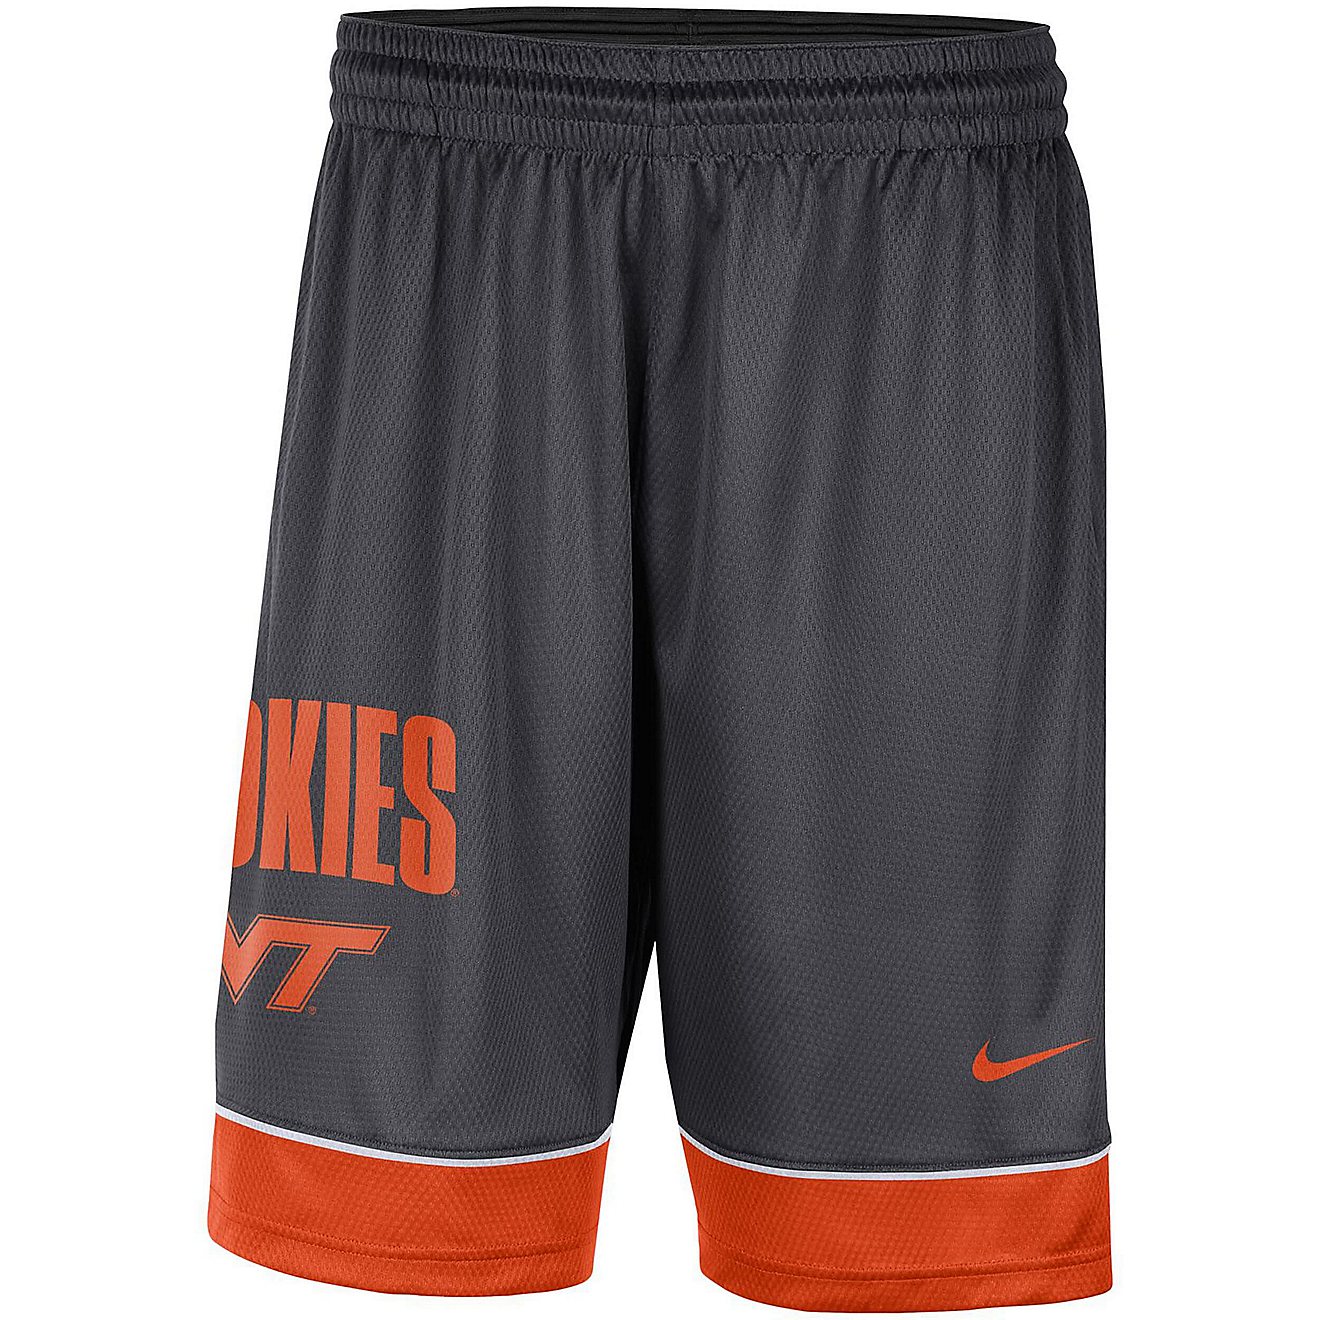 Nike / Virginia Tech Hokies Fast Break Shorts | Academy